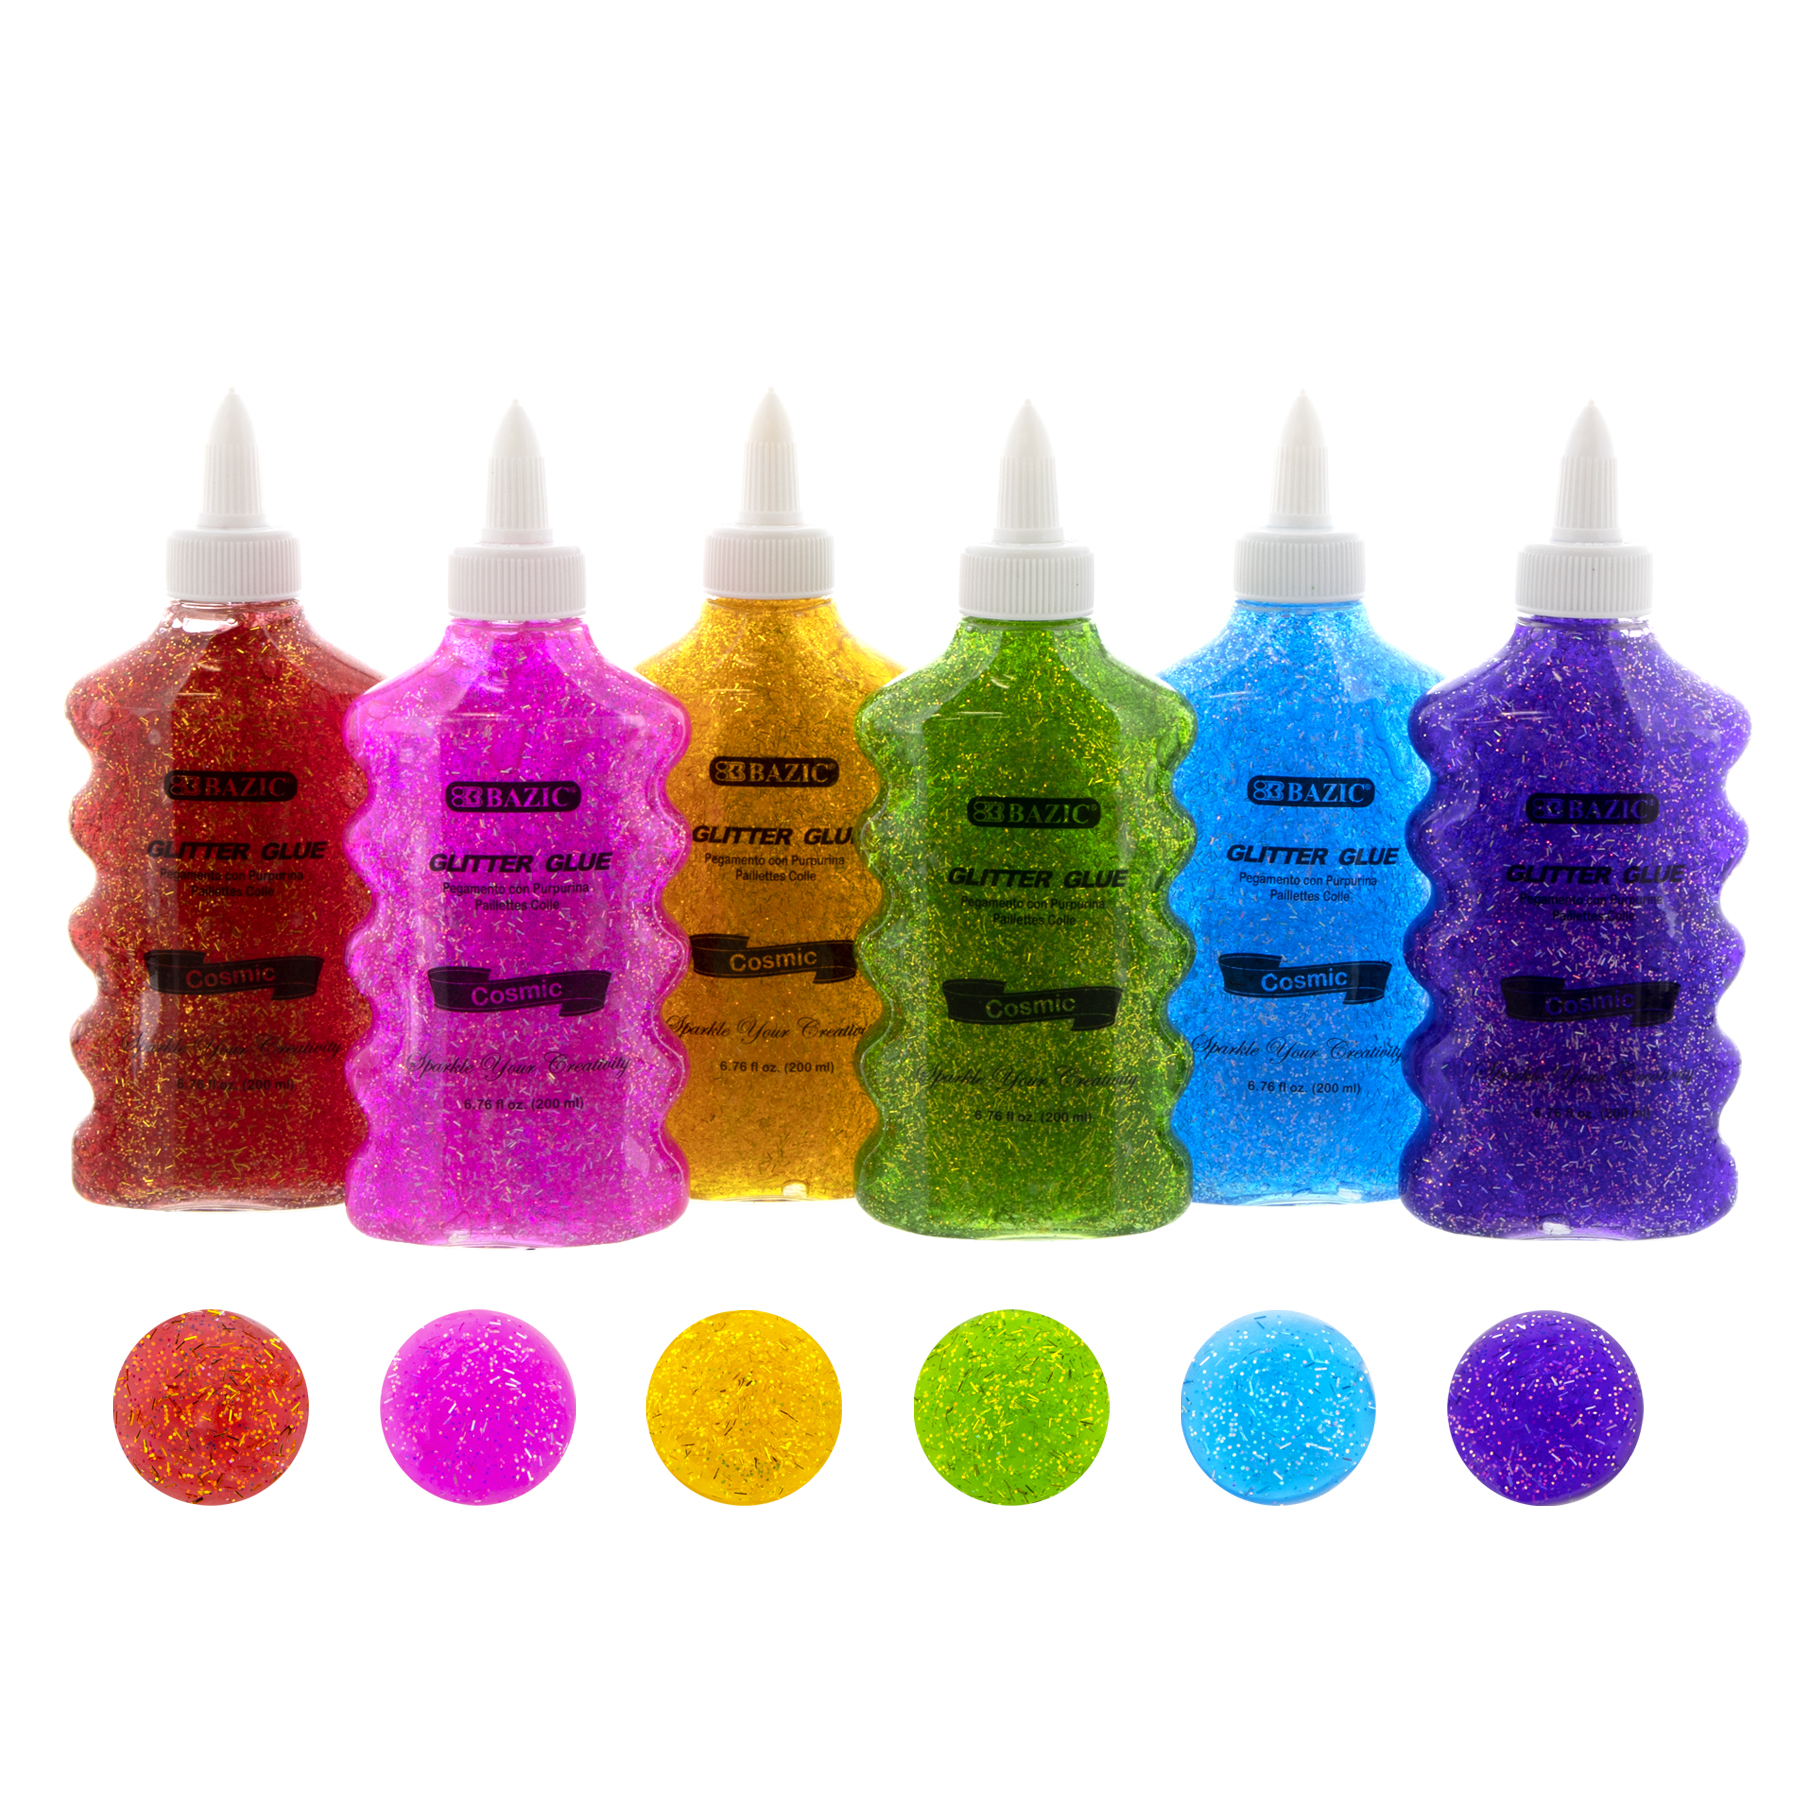 Glitter Glue Cosmic SeriesWashable Sparkling Slime Colors - 6.76 fl oz (200ml)12-Pack - G8 Central